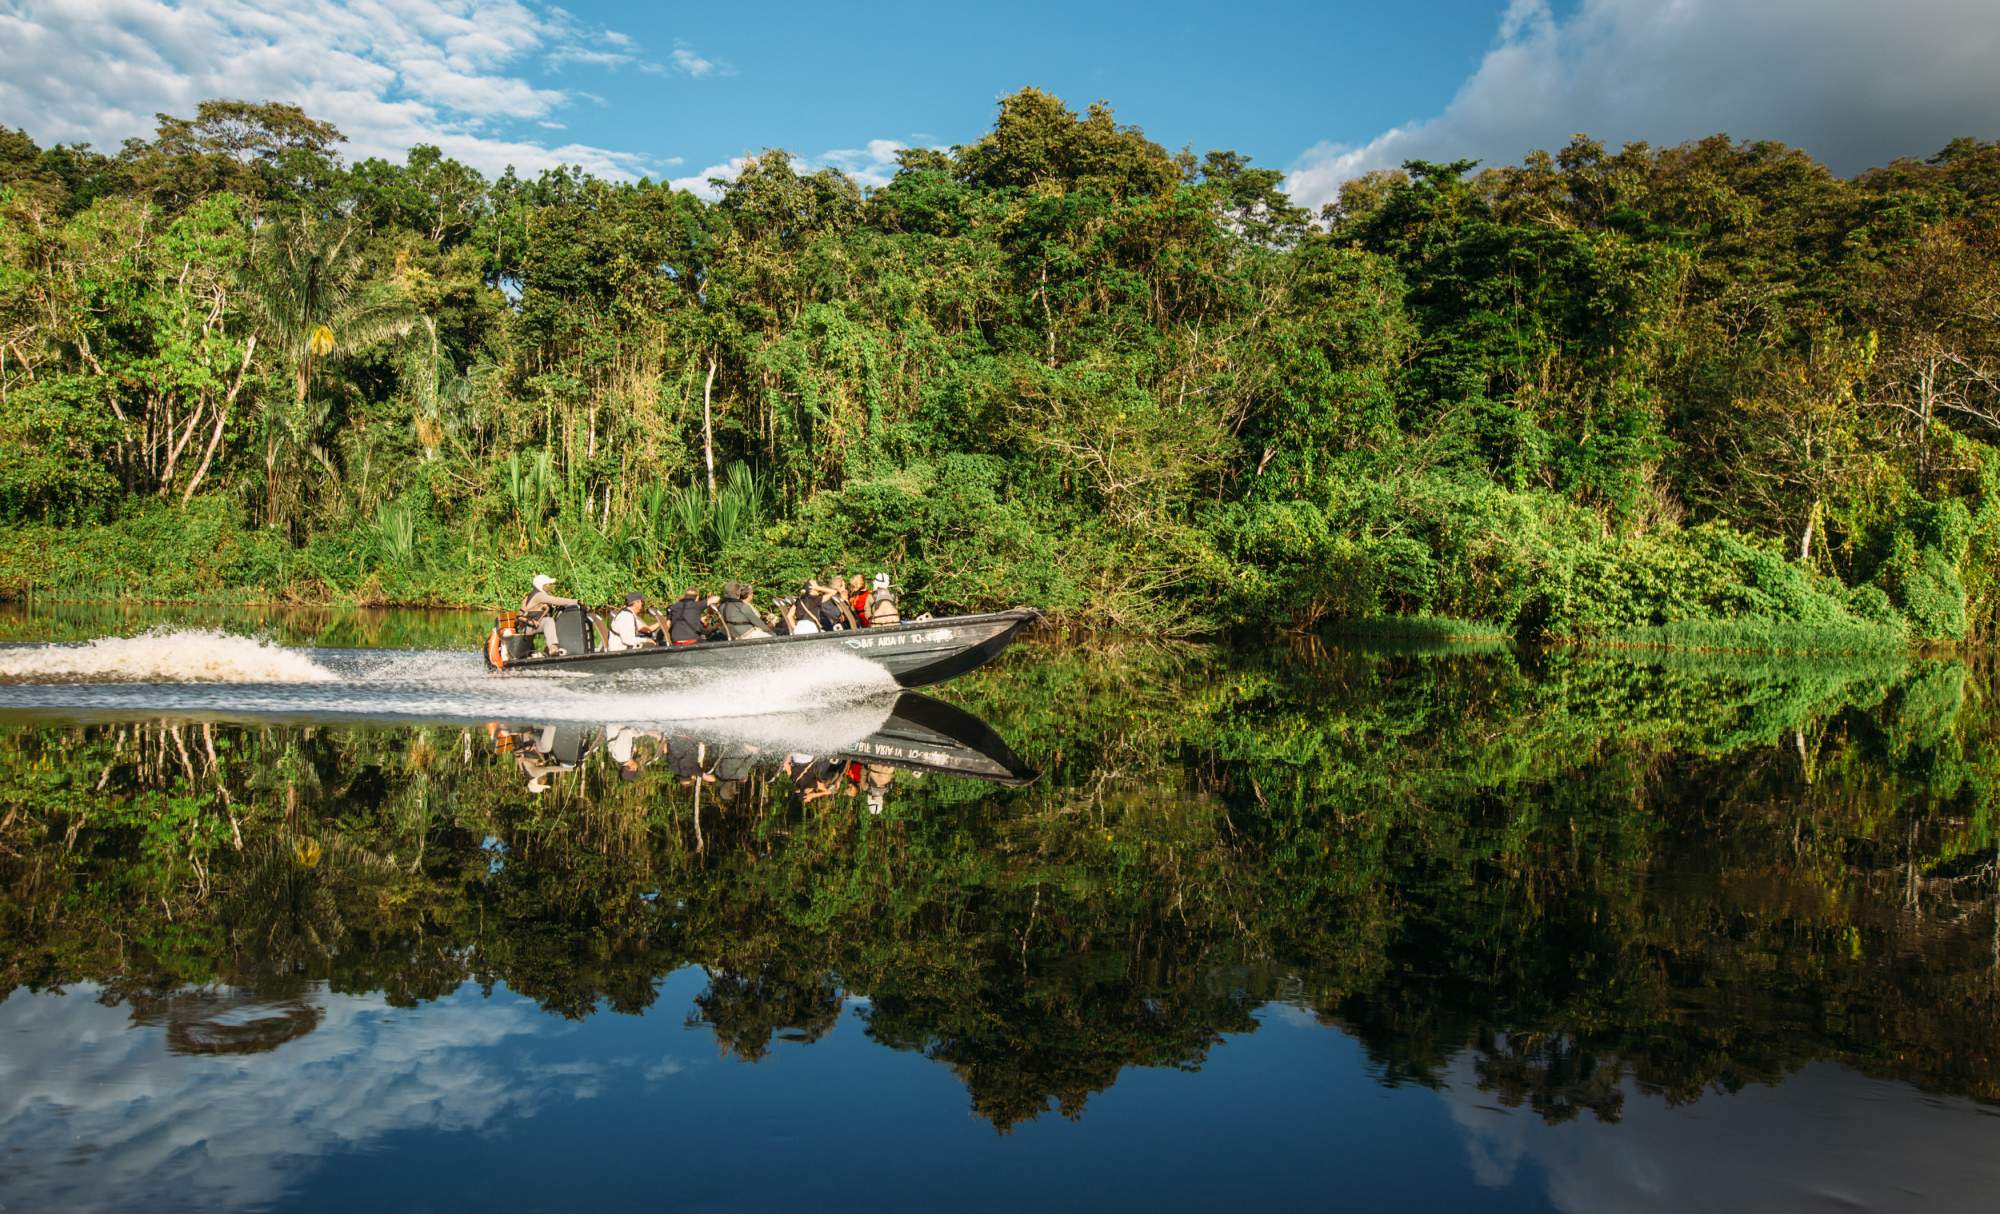 Exploring the Amazon by skiff